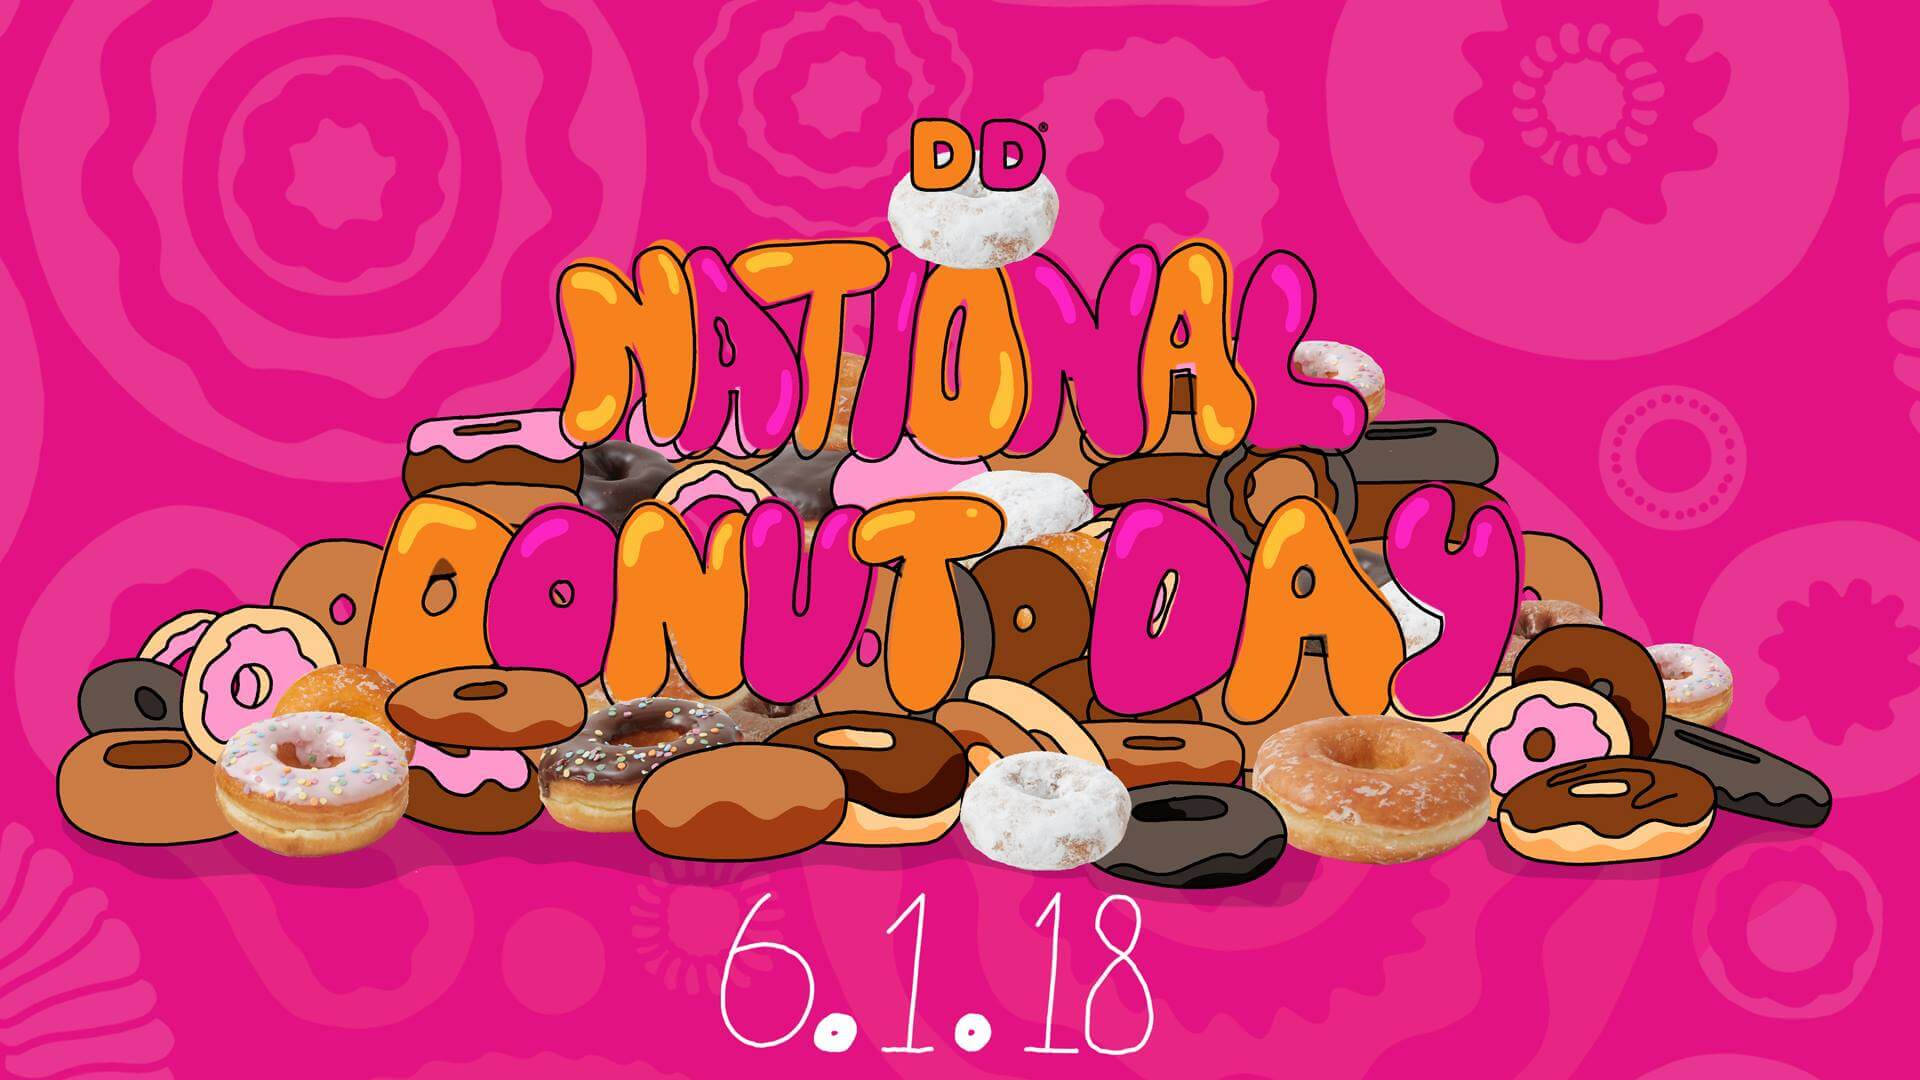 Dunkin Donuts National Donut Day 2018